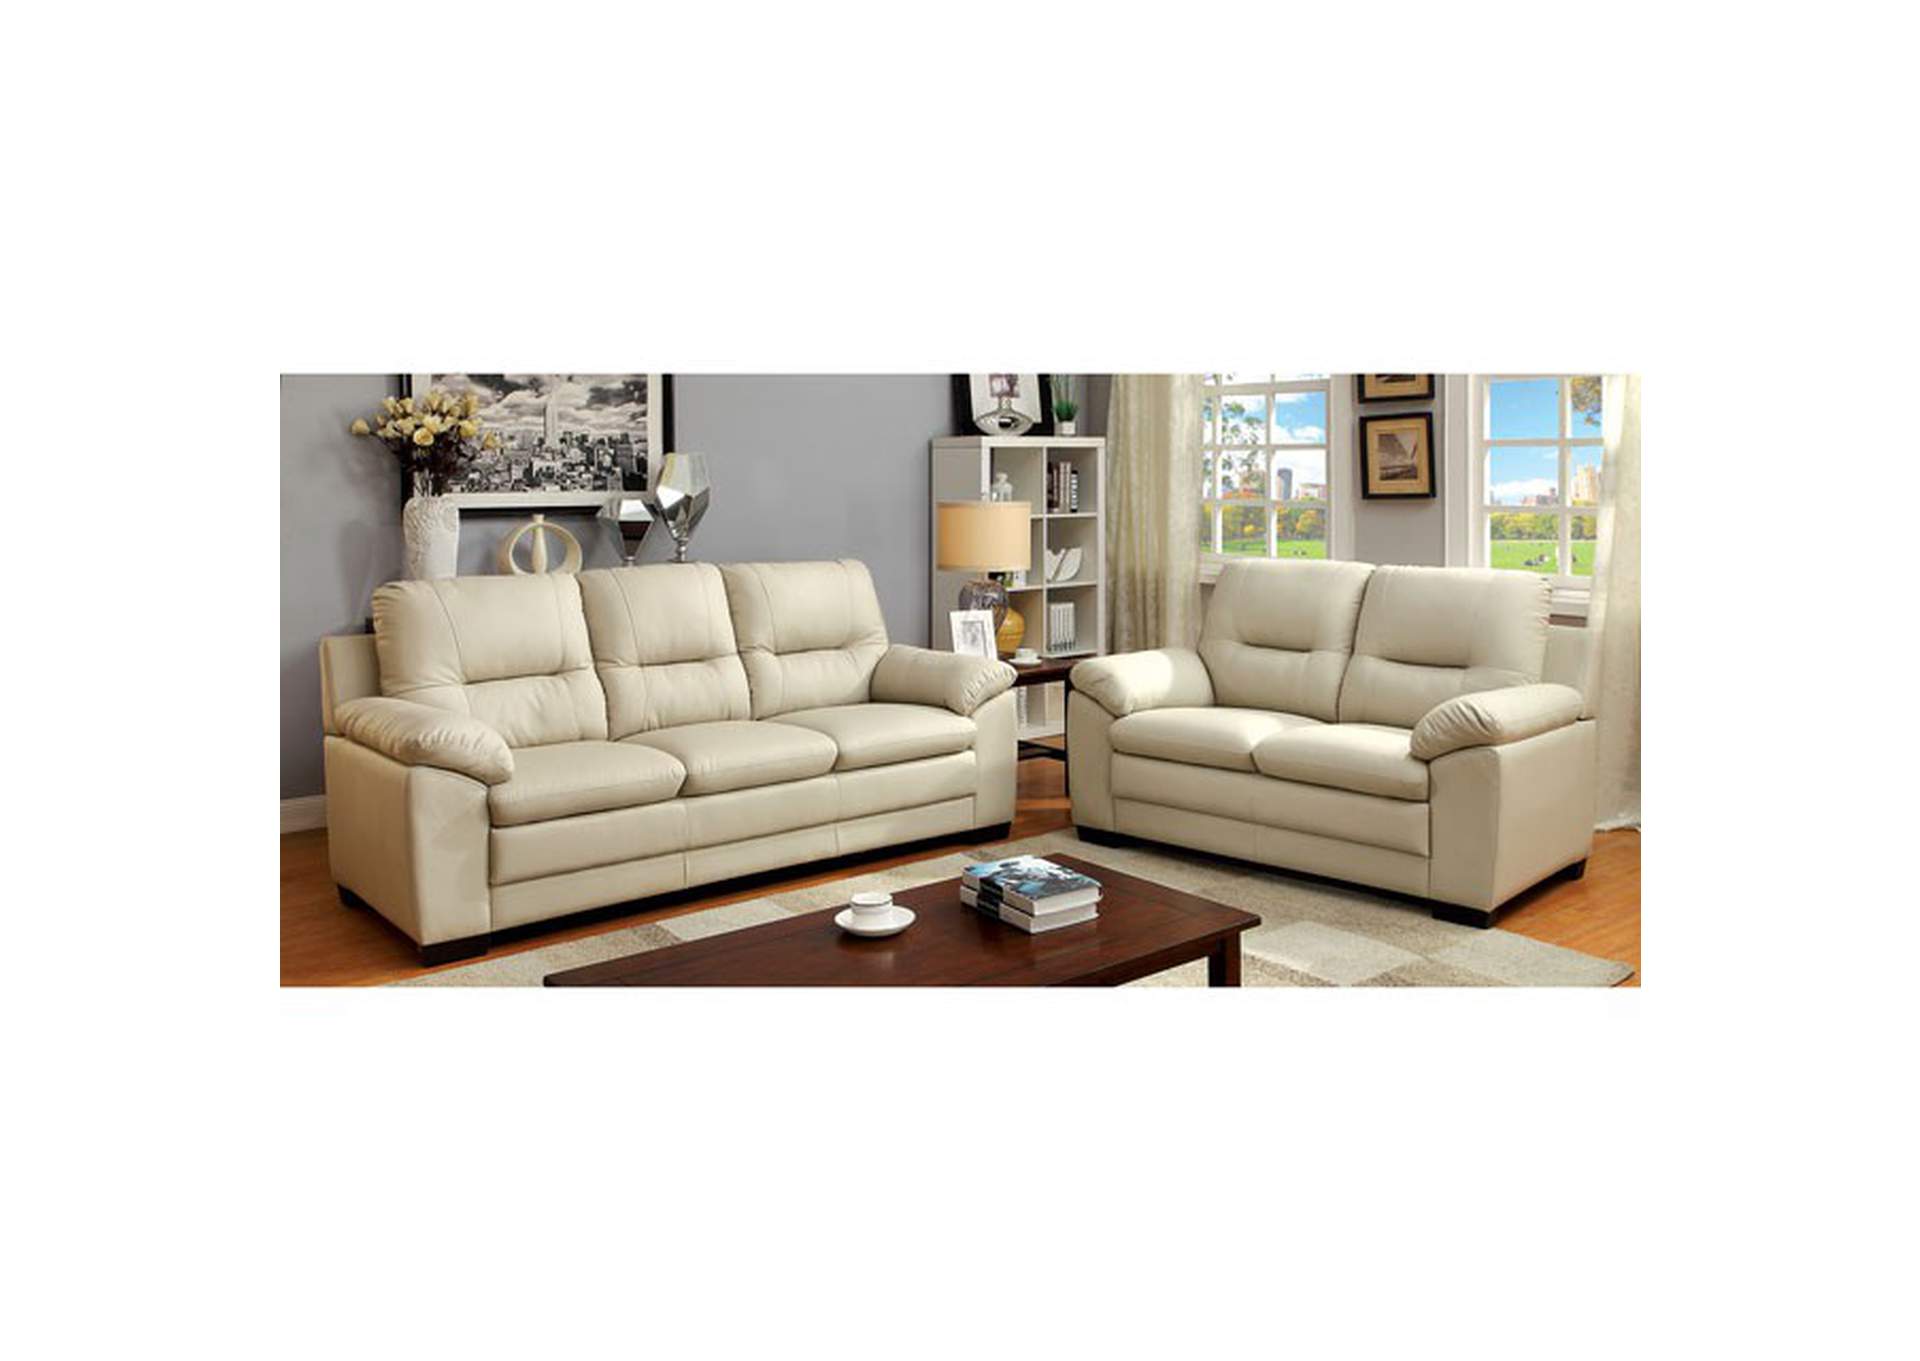 Parma Ivory Sofa,Furniture of America